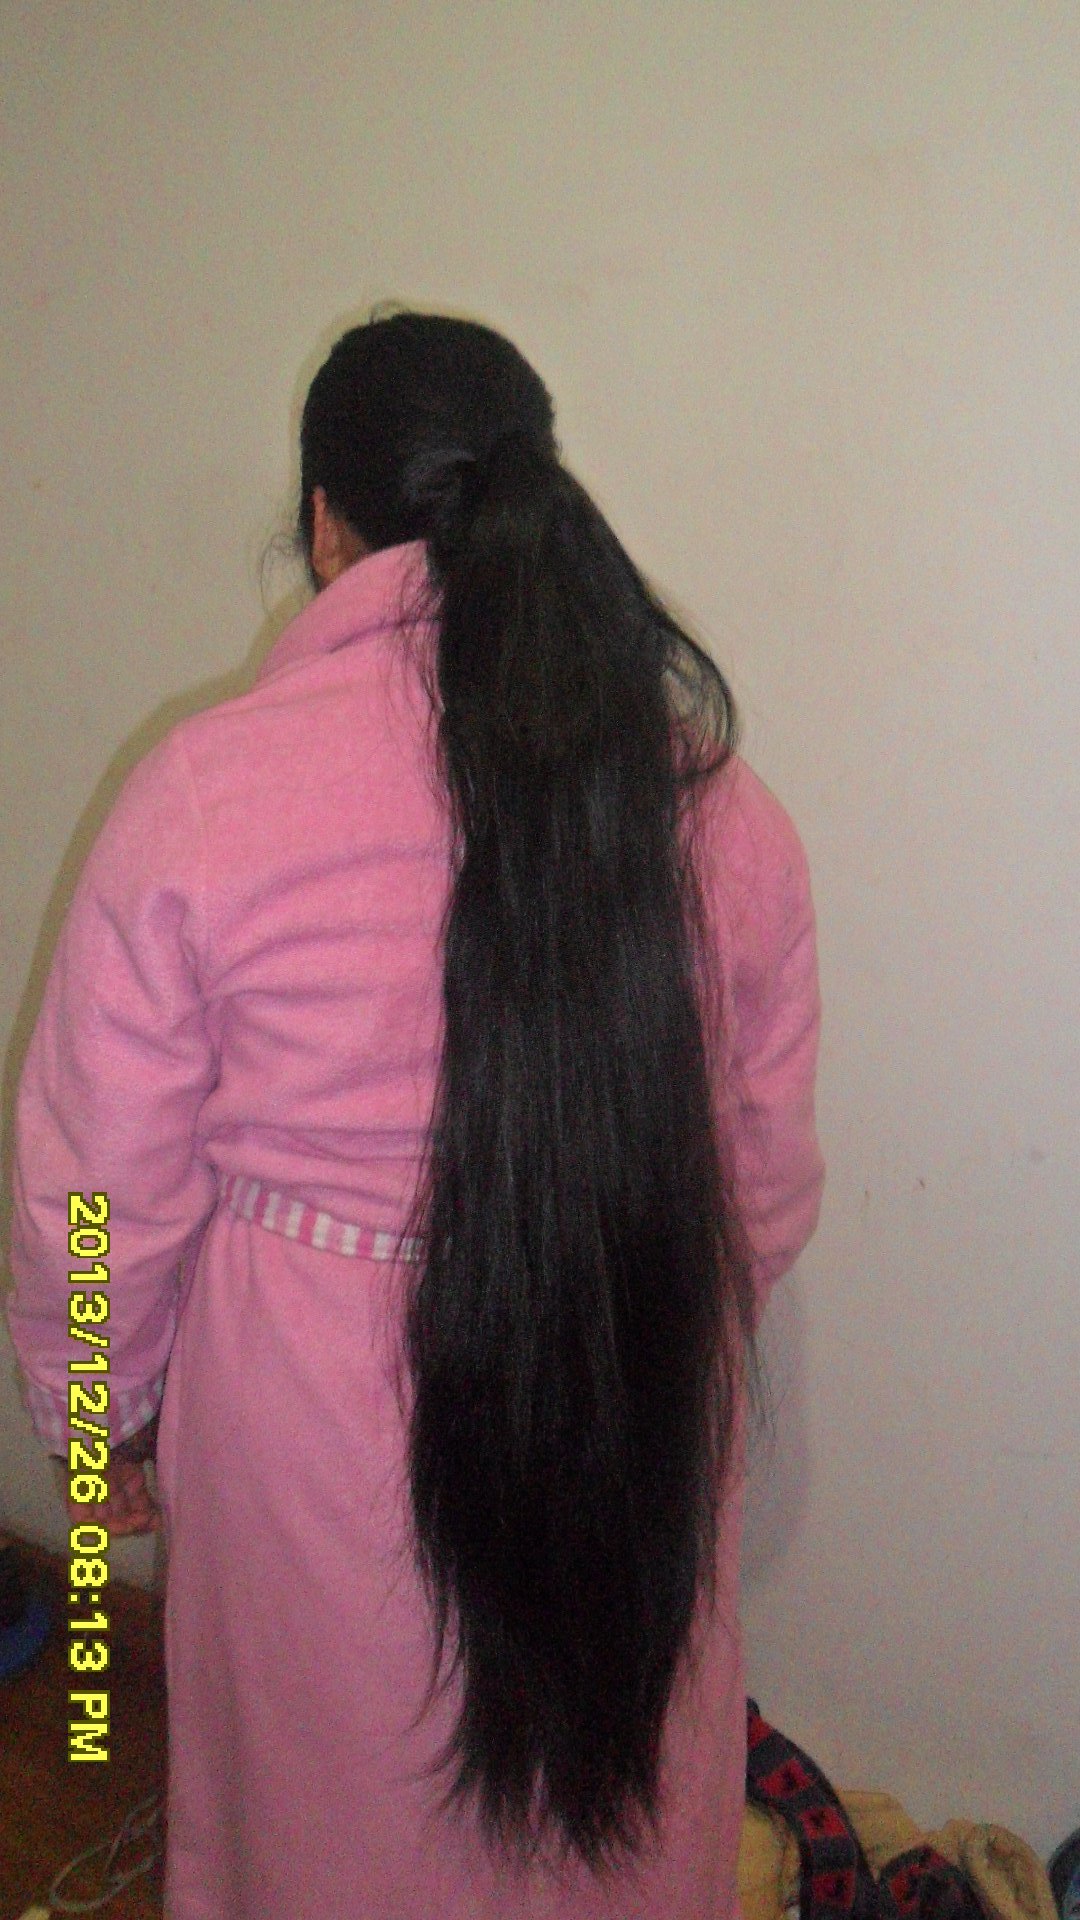 Thigh length long hair in 2011 winter